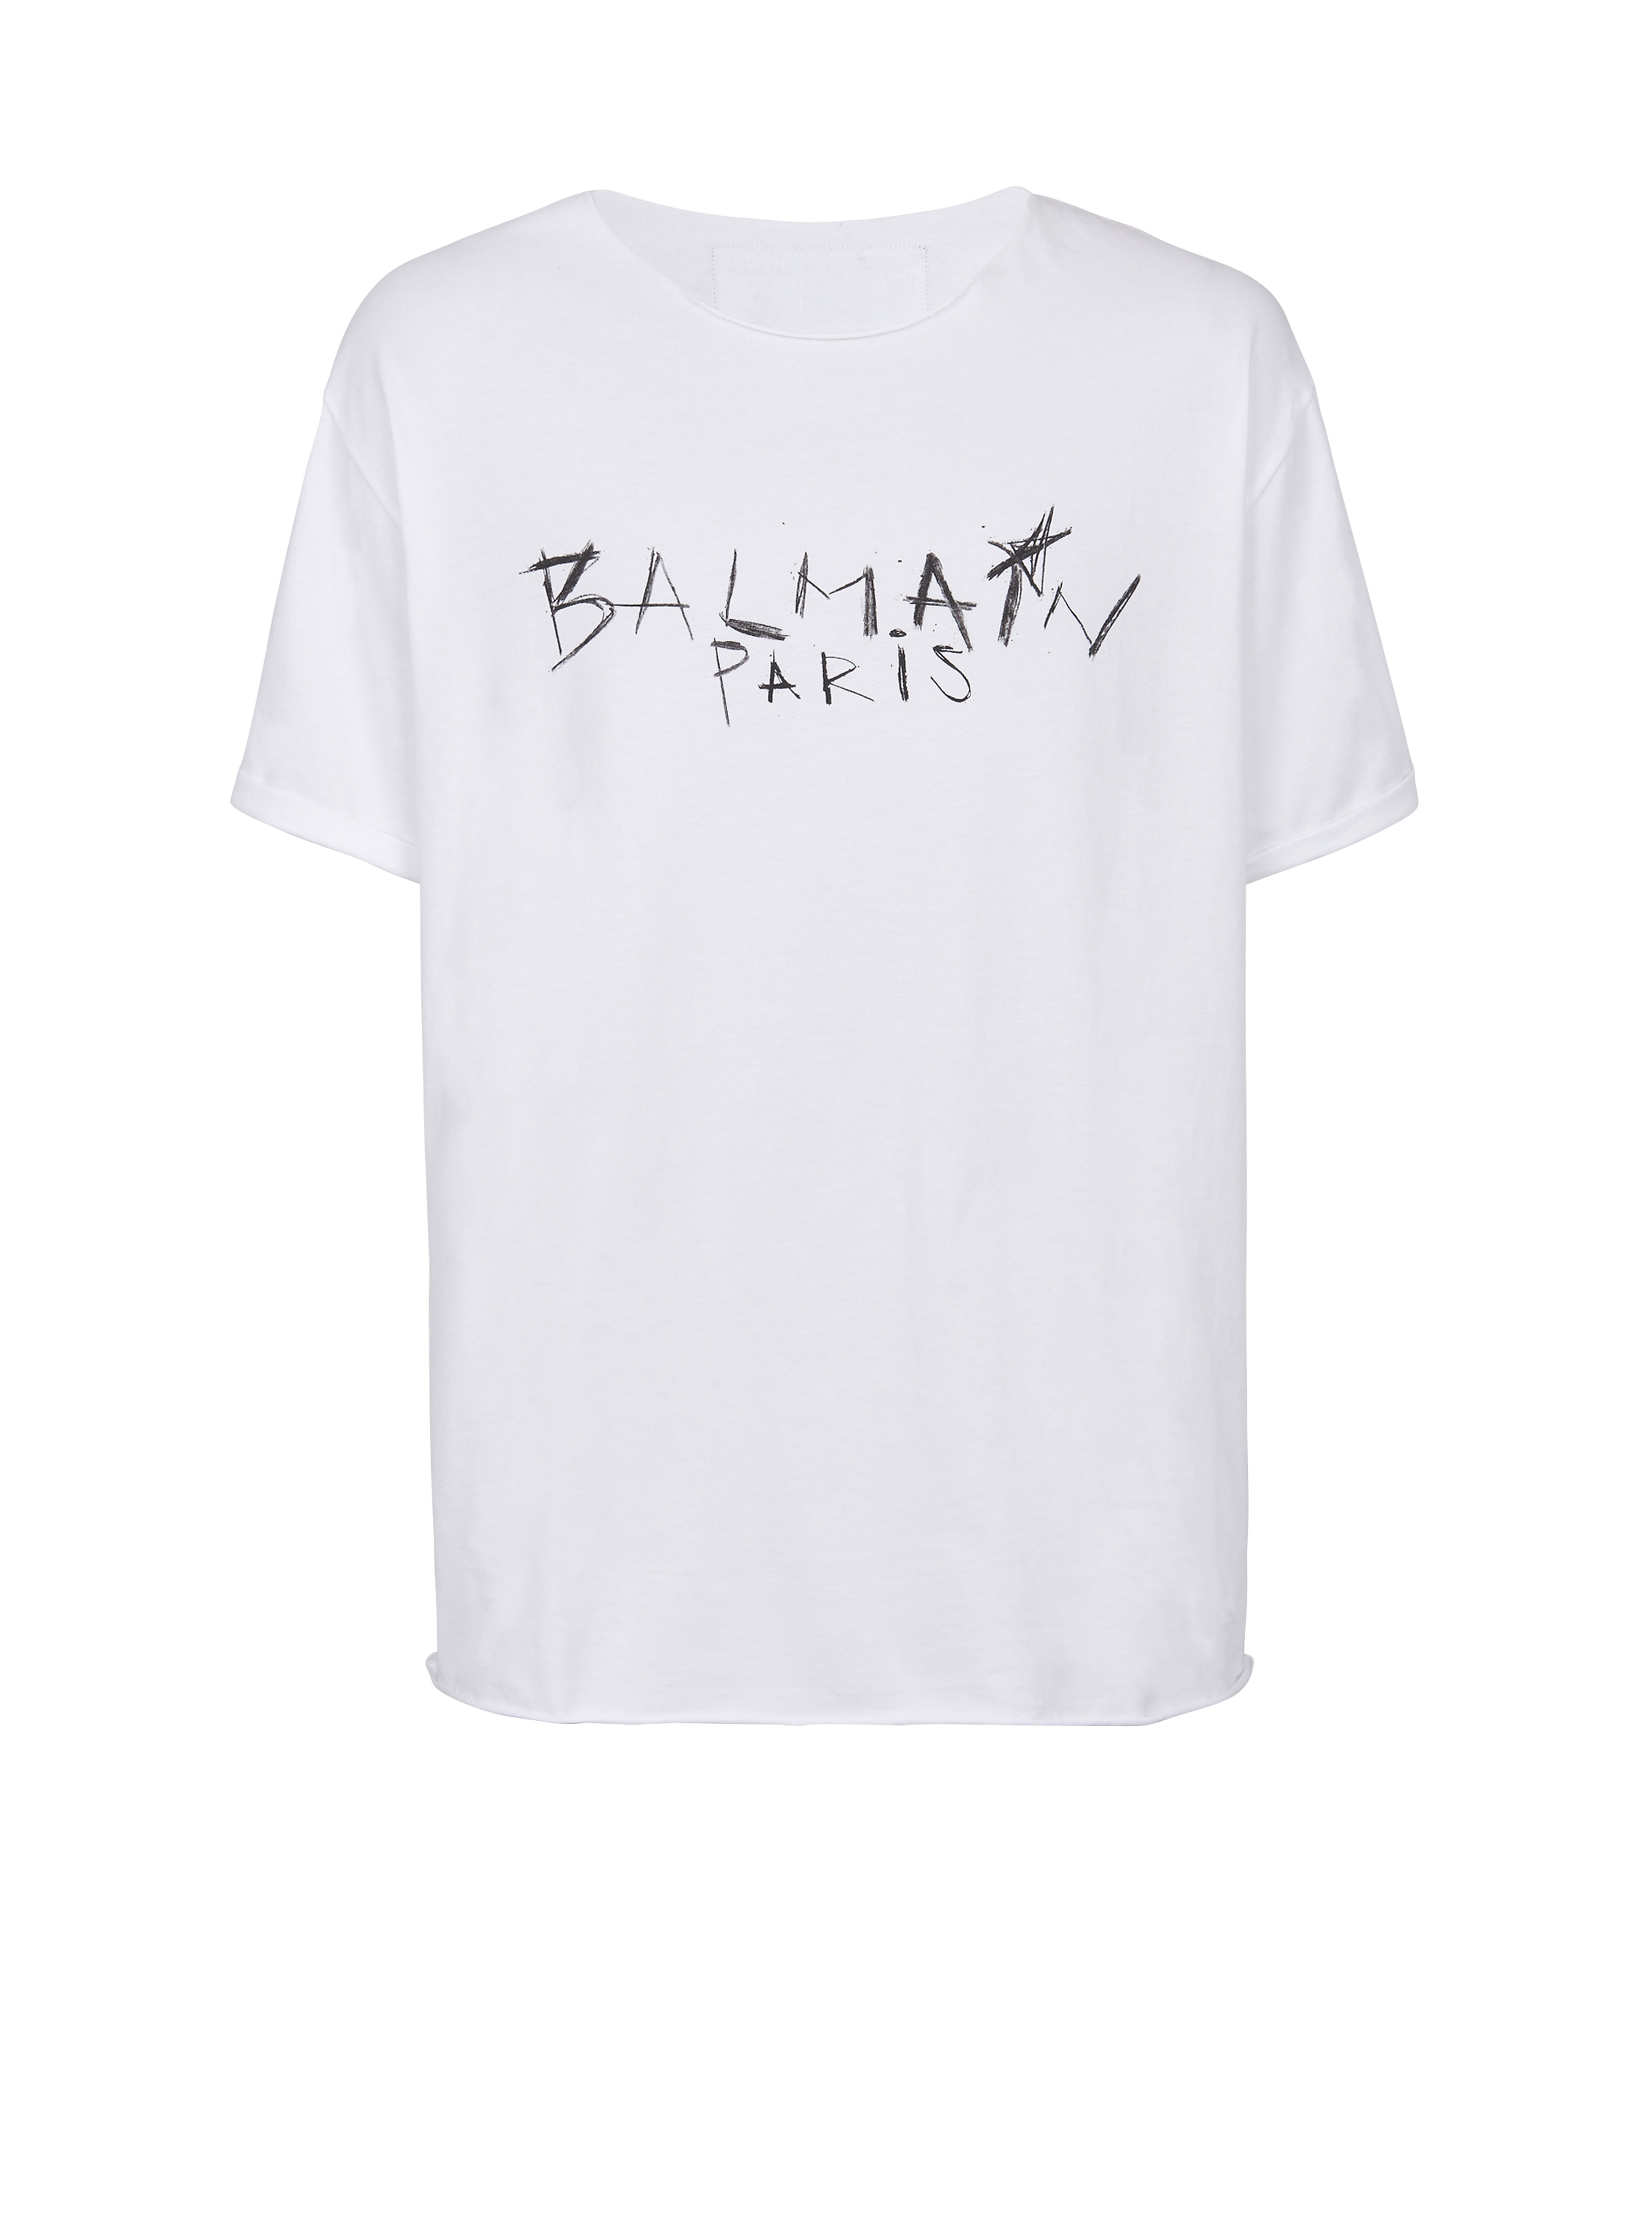 Cotton T-shirt with Balmain Paris graffiti logo print, white